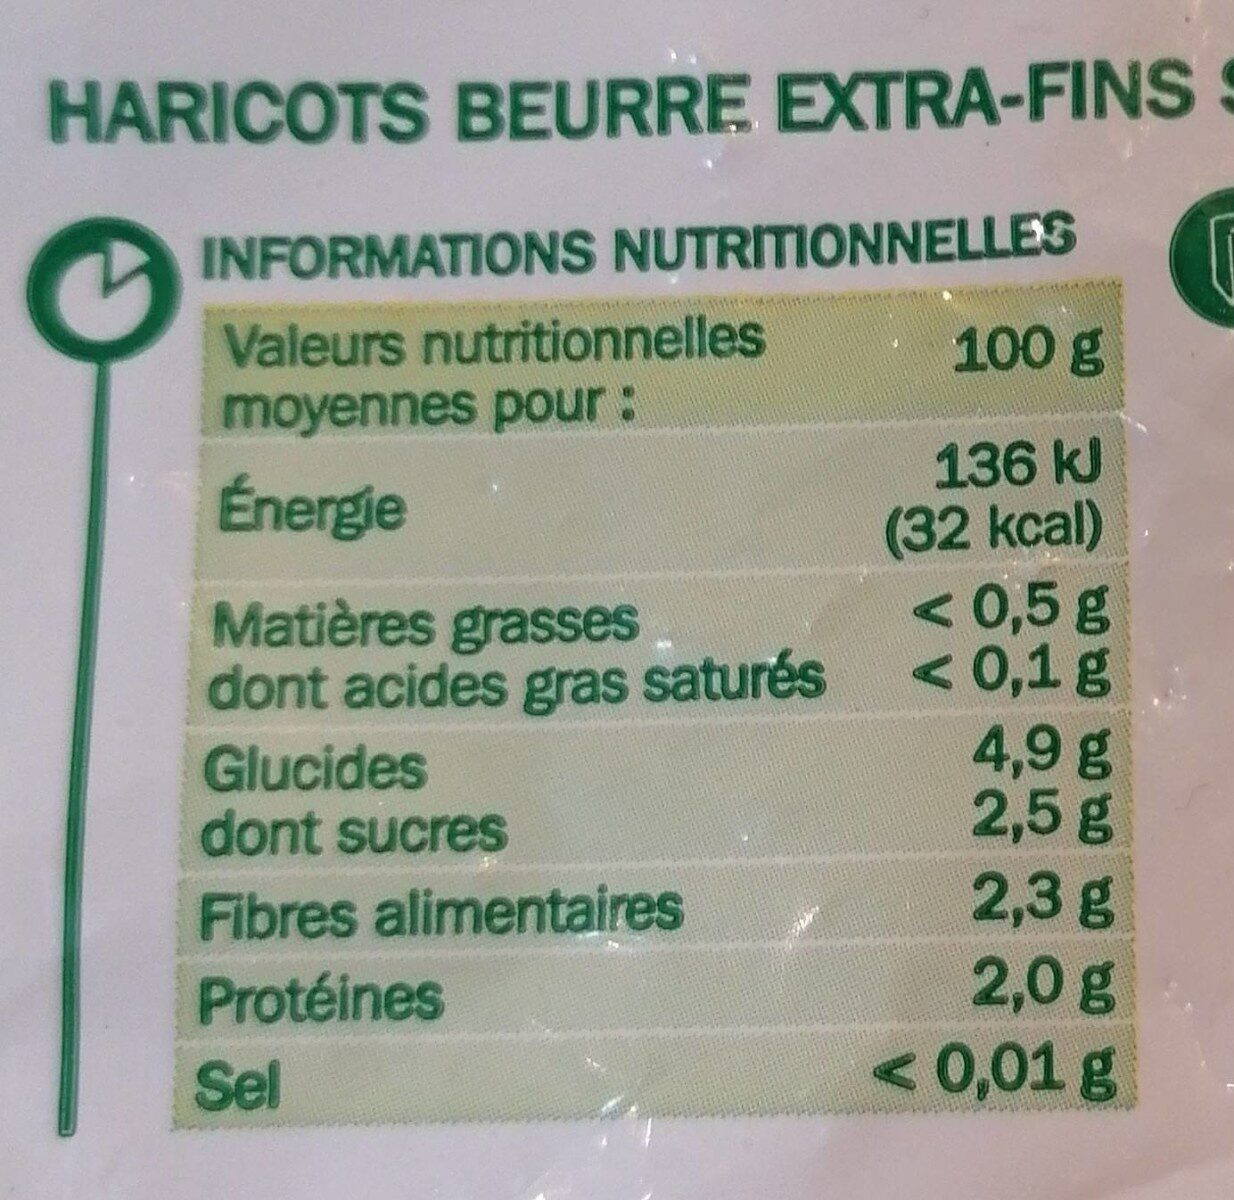 Haricots beurre Extra fins - Nährwertangaben - fr